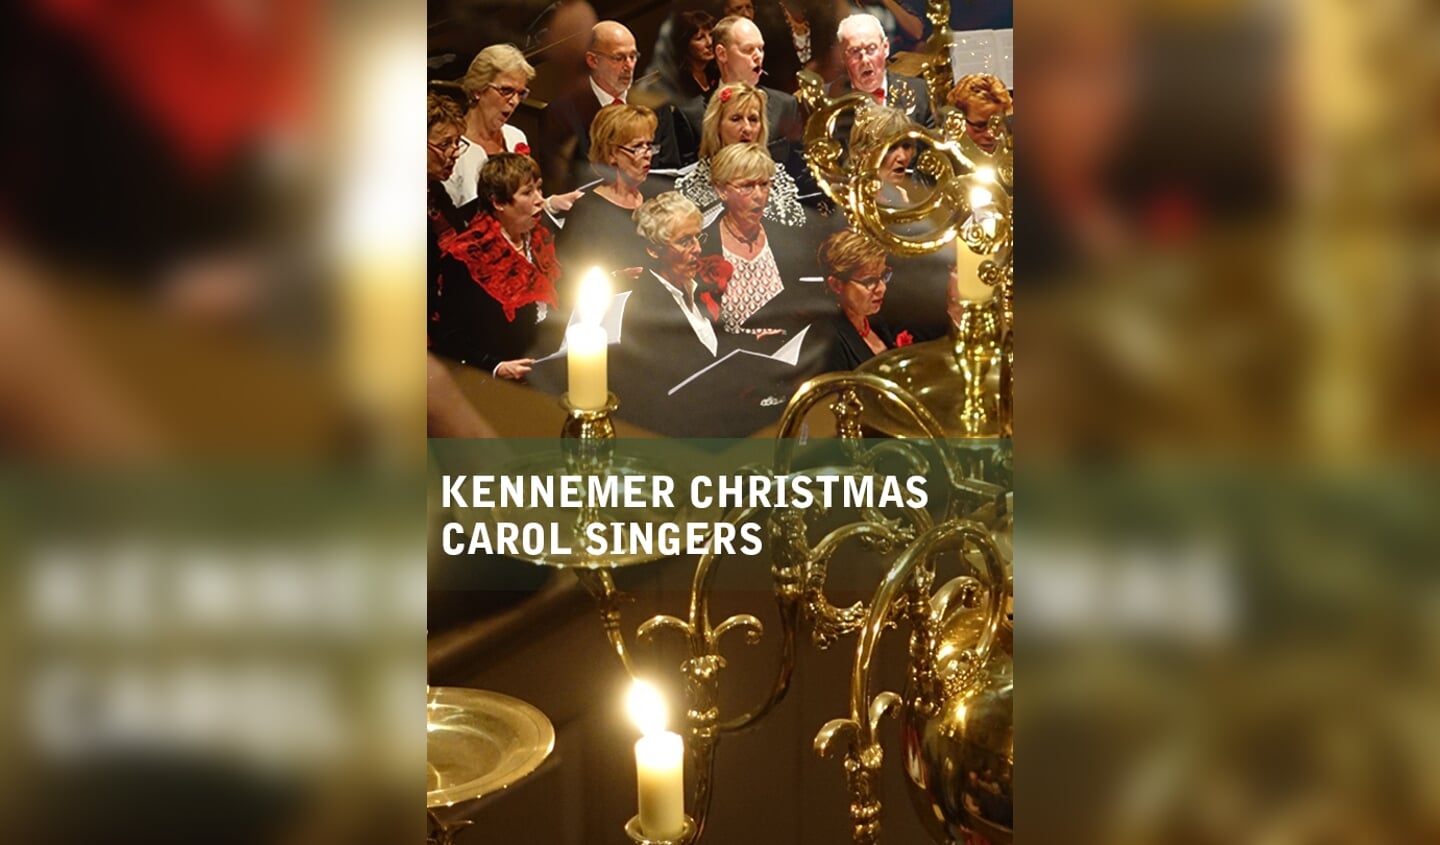 The Kennemer Christmas Carols Singers.